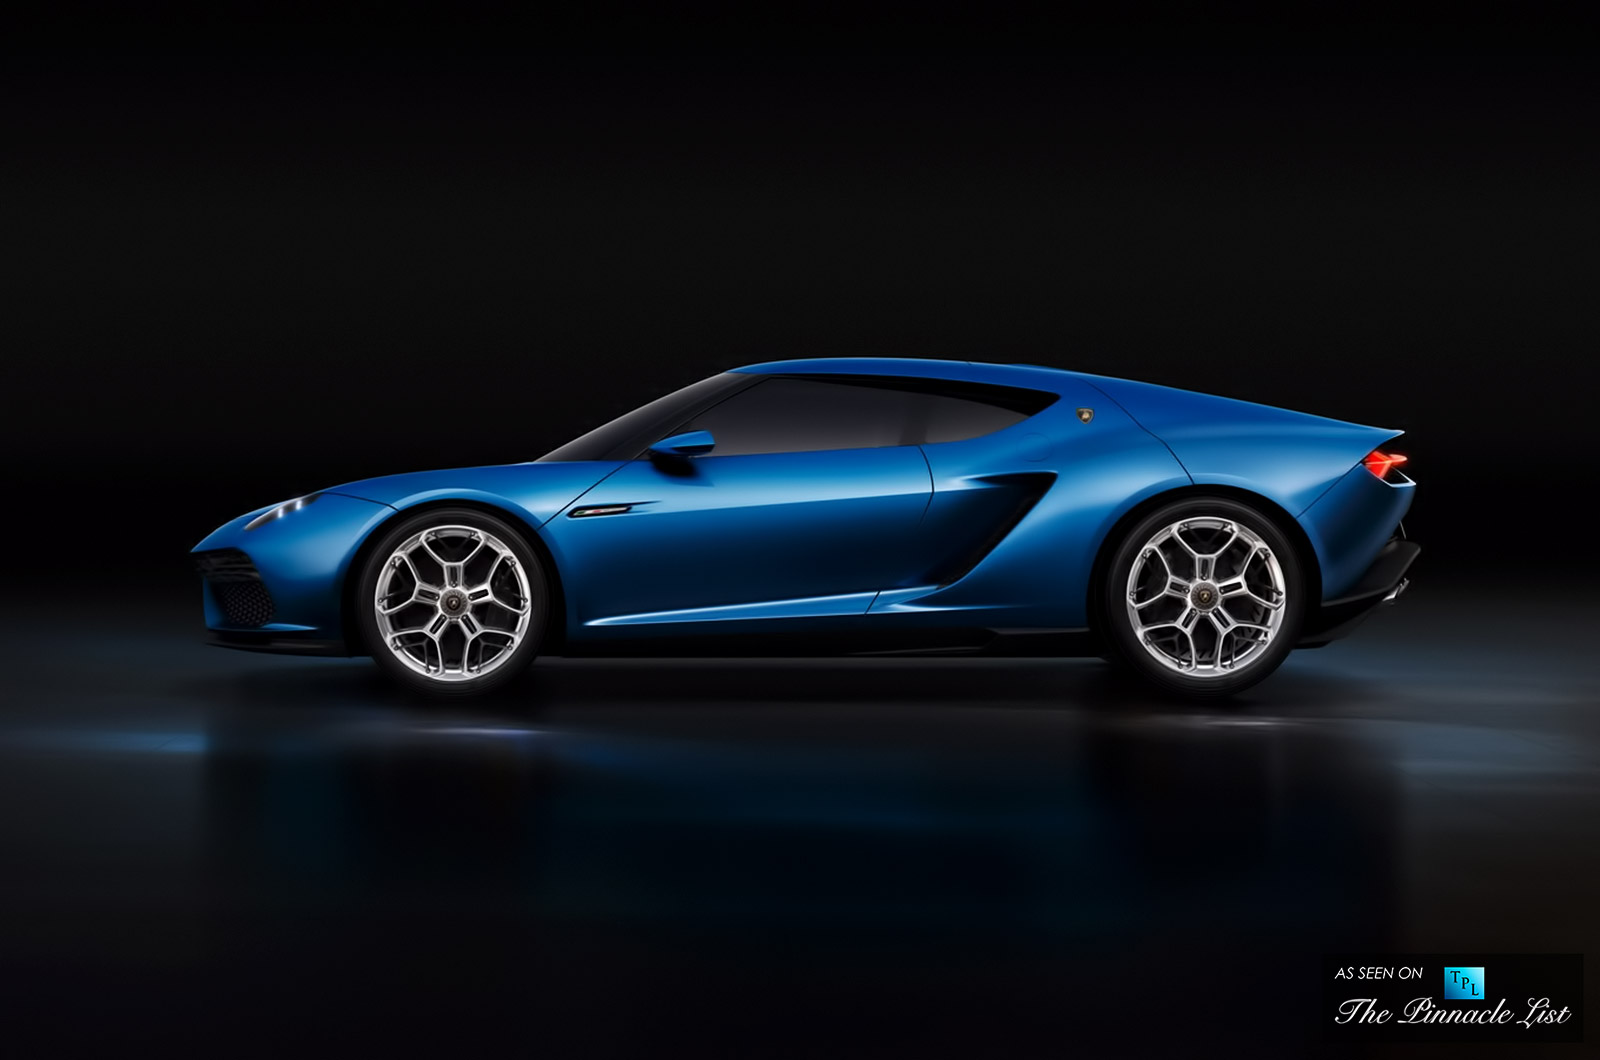 Meet the New 2015 Lamborghini Asterion LPI 910-4 Hybrid Supercar